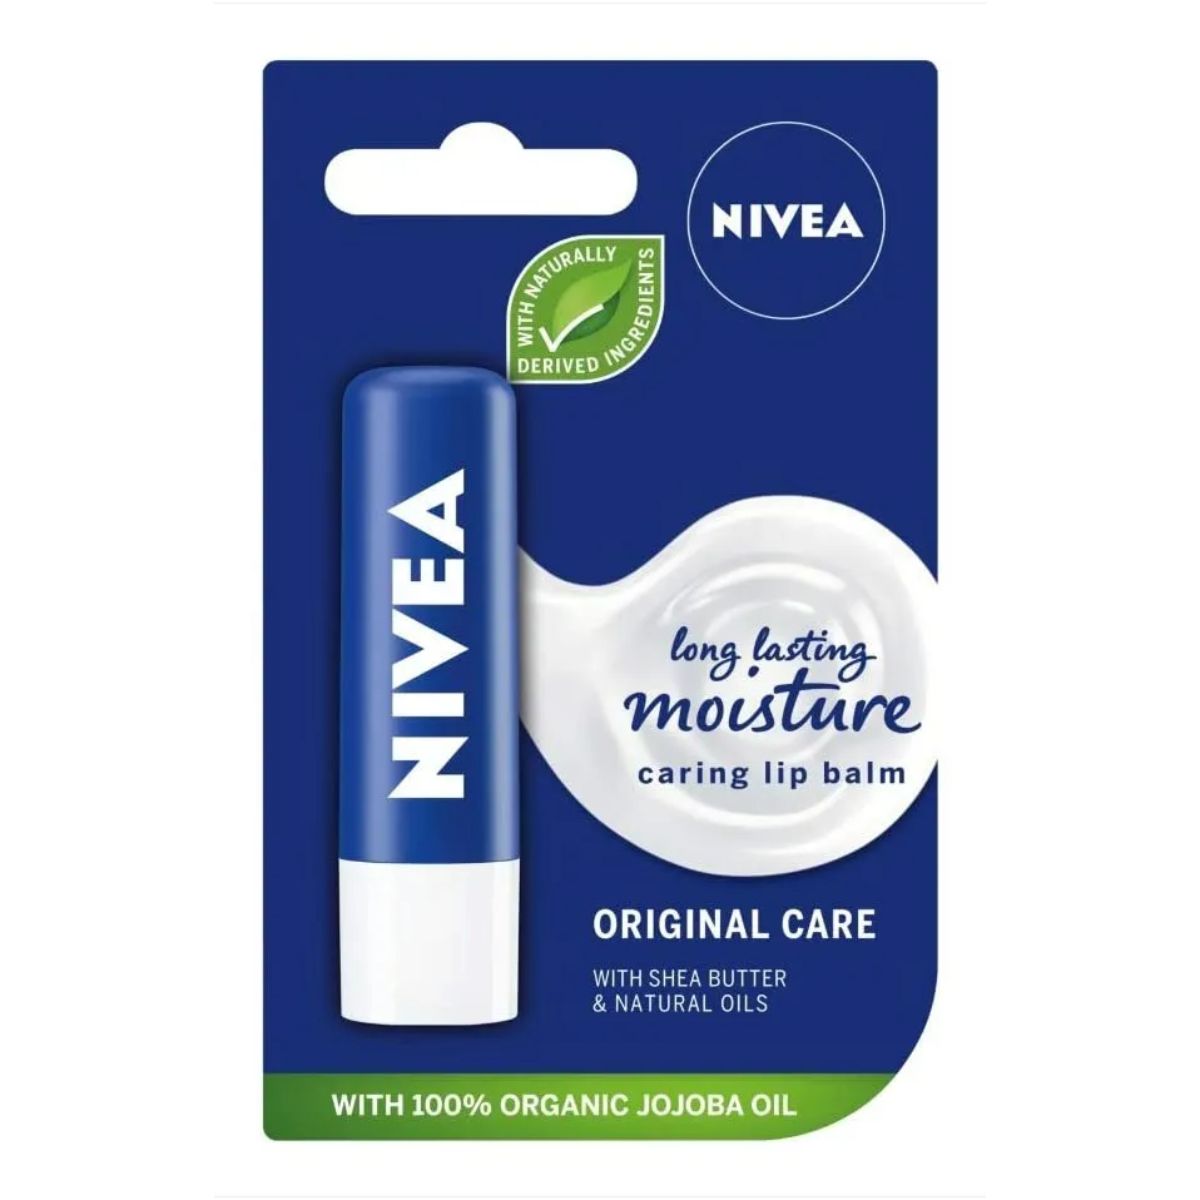 A Nivea - Lip Balm Original Care - 5.5ml blue and white package of lip balm.